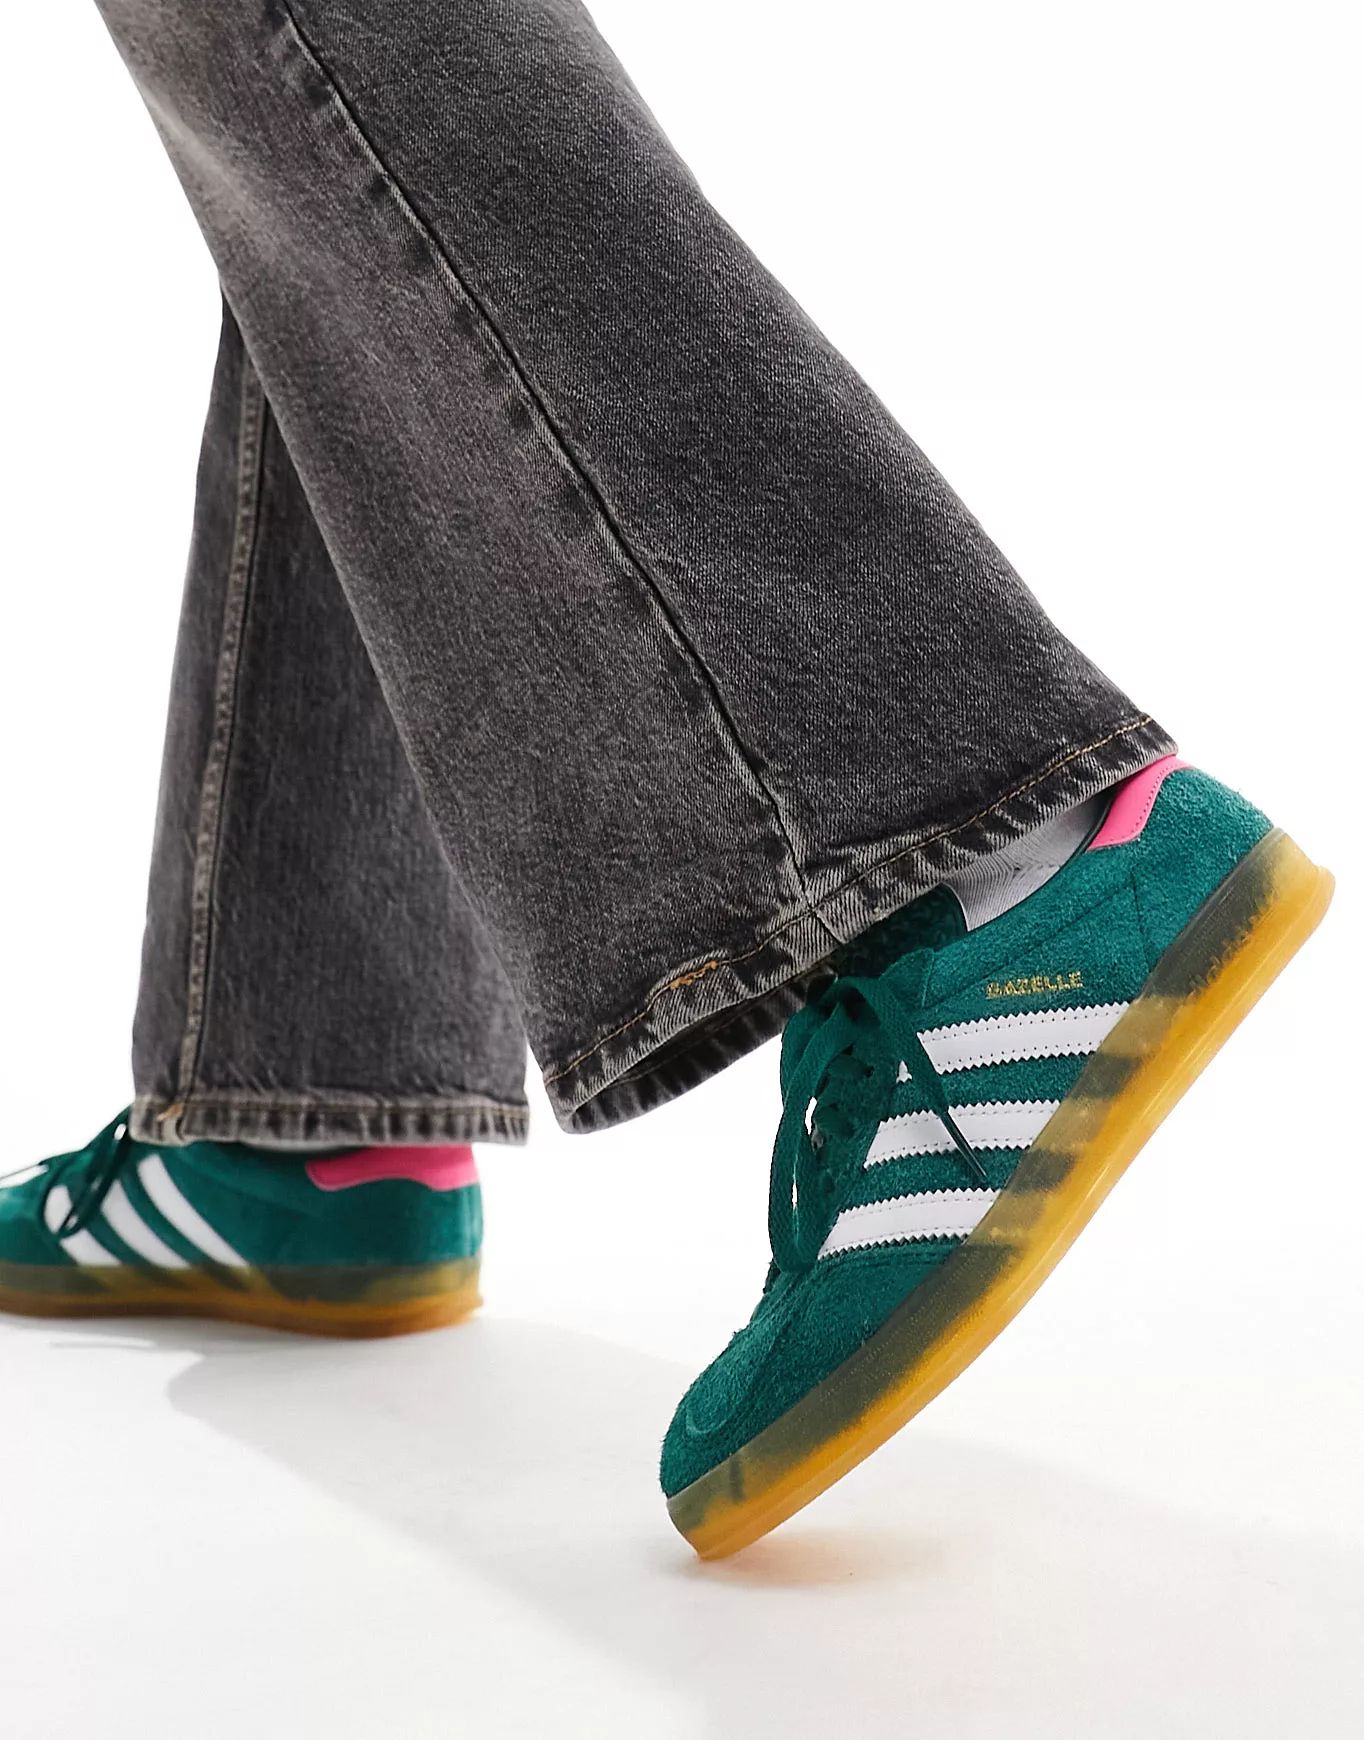 adidas Originals Gazelle Indoor trainers in green and pink | ASOS (Global)